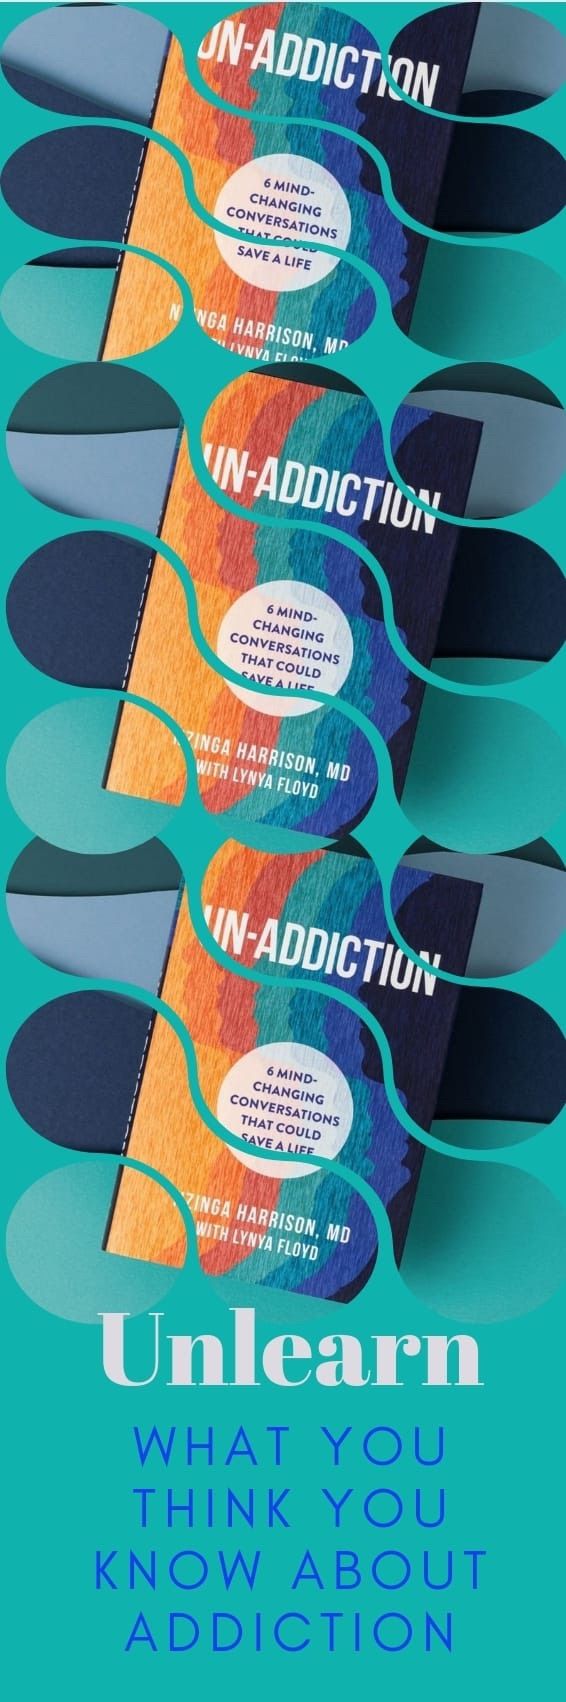 Un-Addiction Book Signing - Washington DC - SAVE THE DATE! 